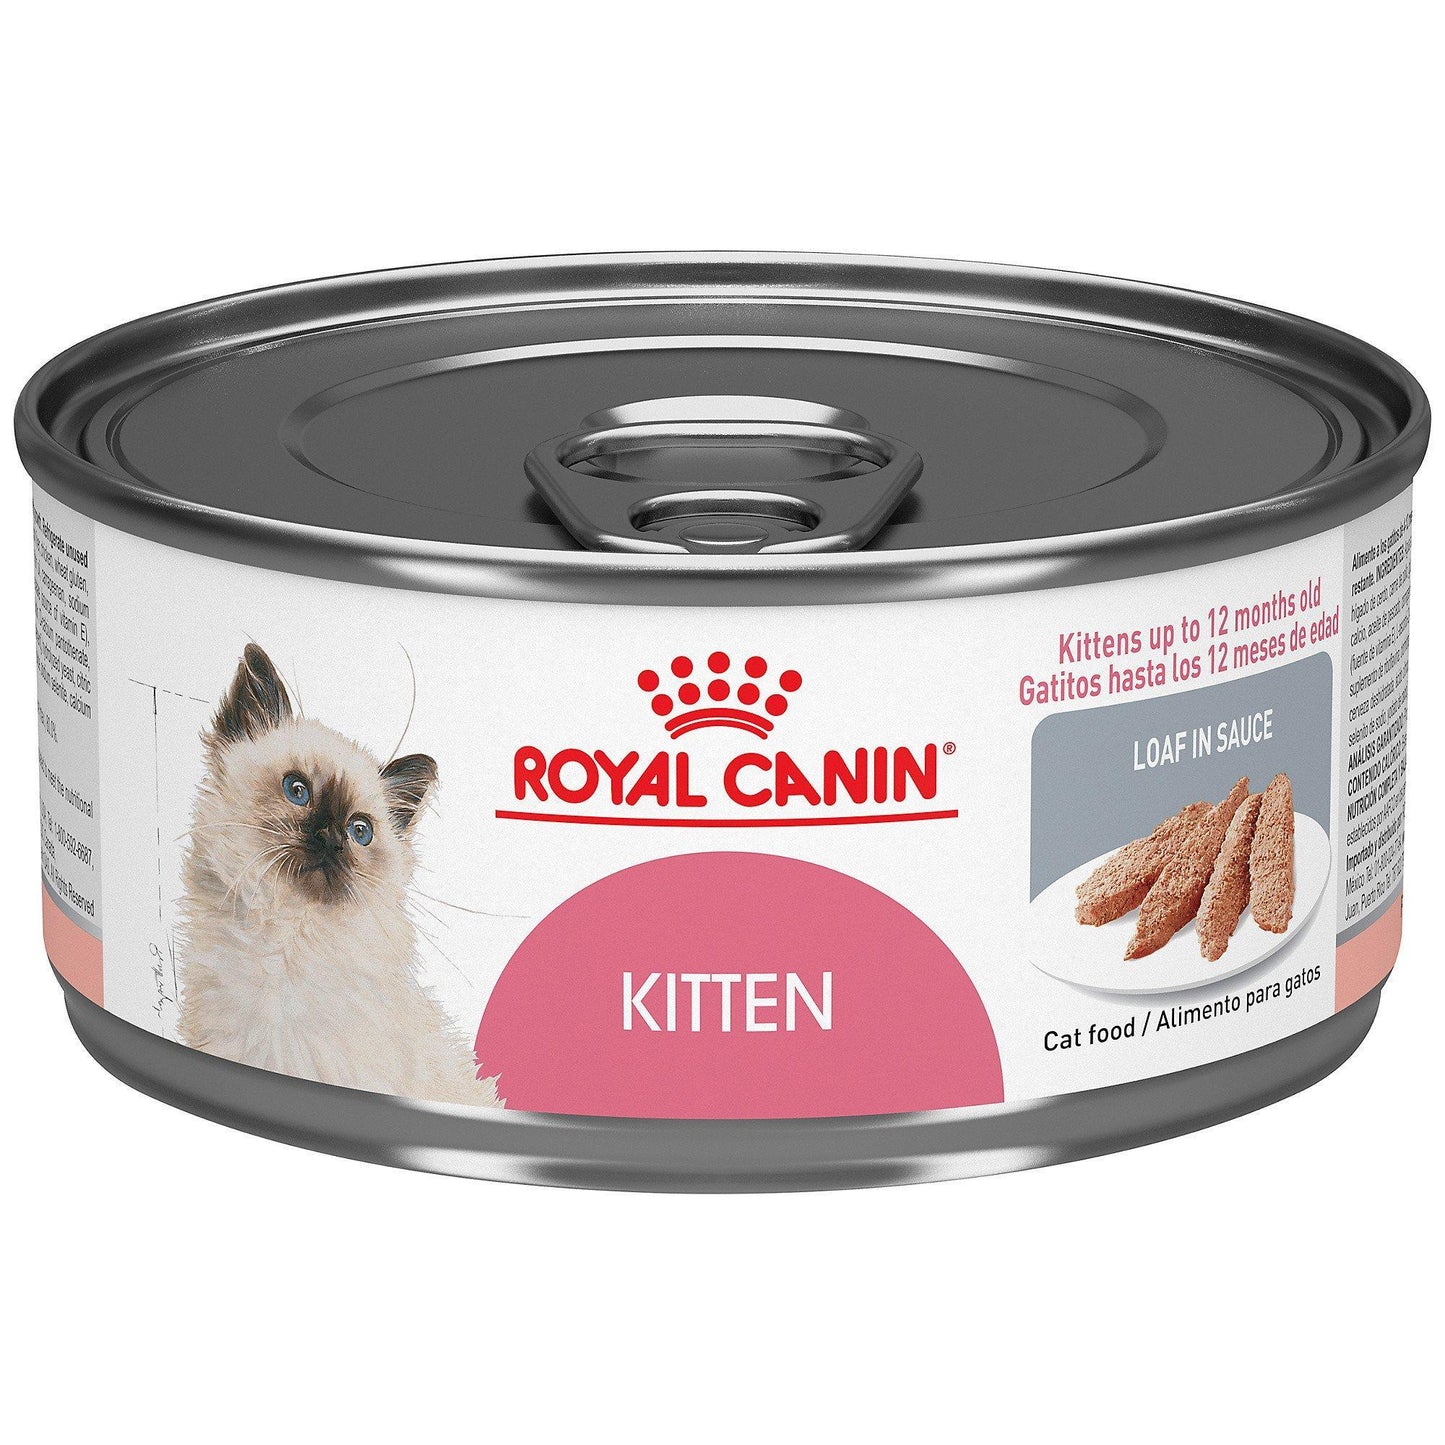 Royal Canin Kitten 5.1z